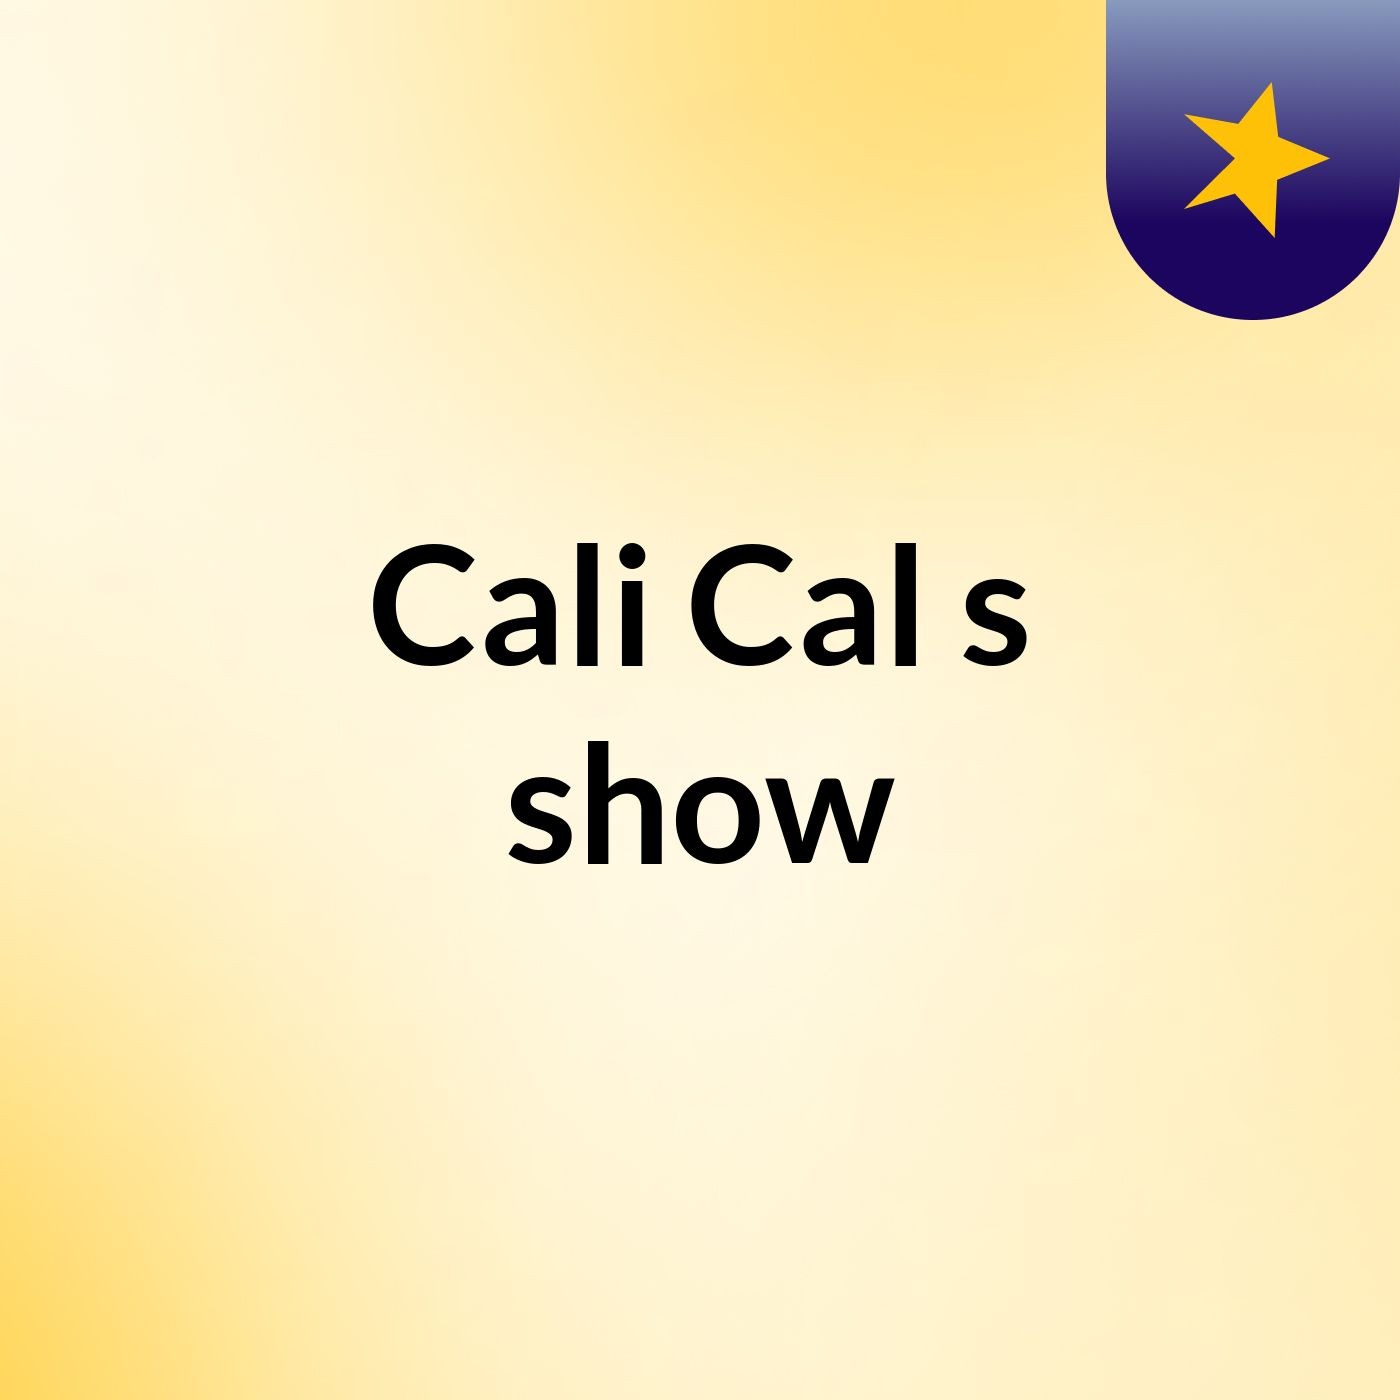 Cali Cal's show